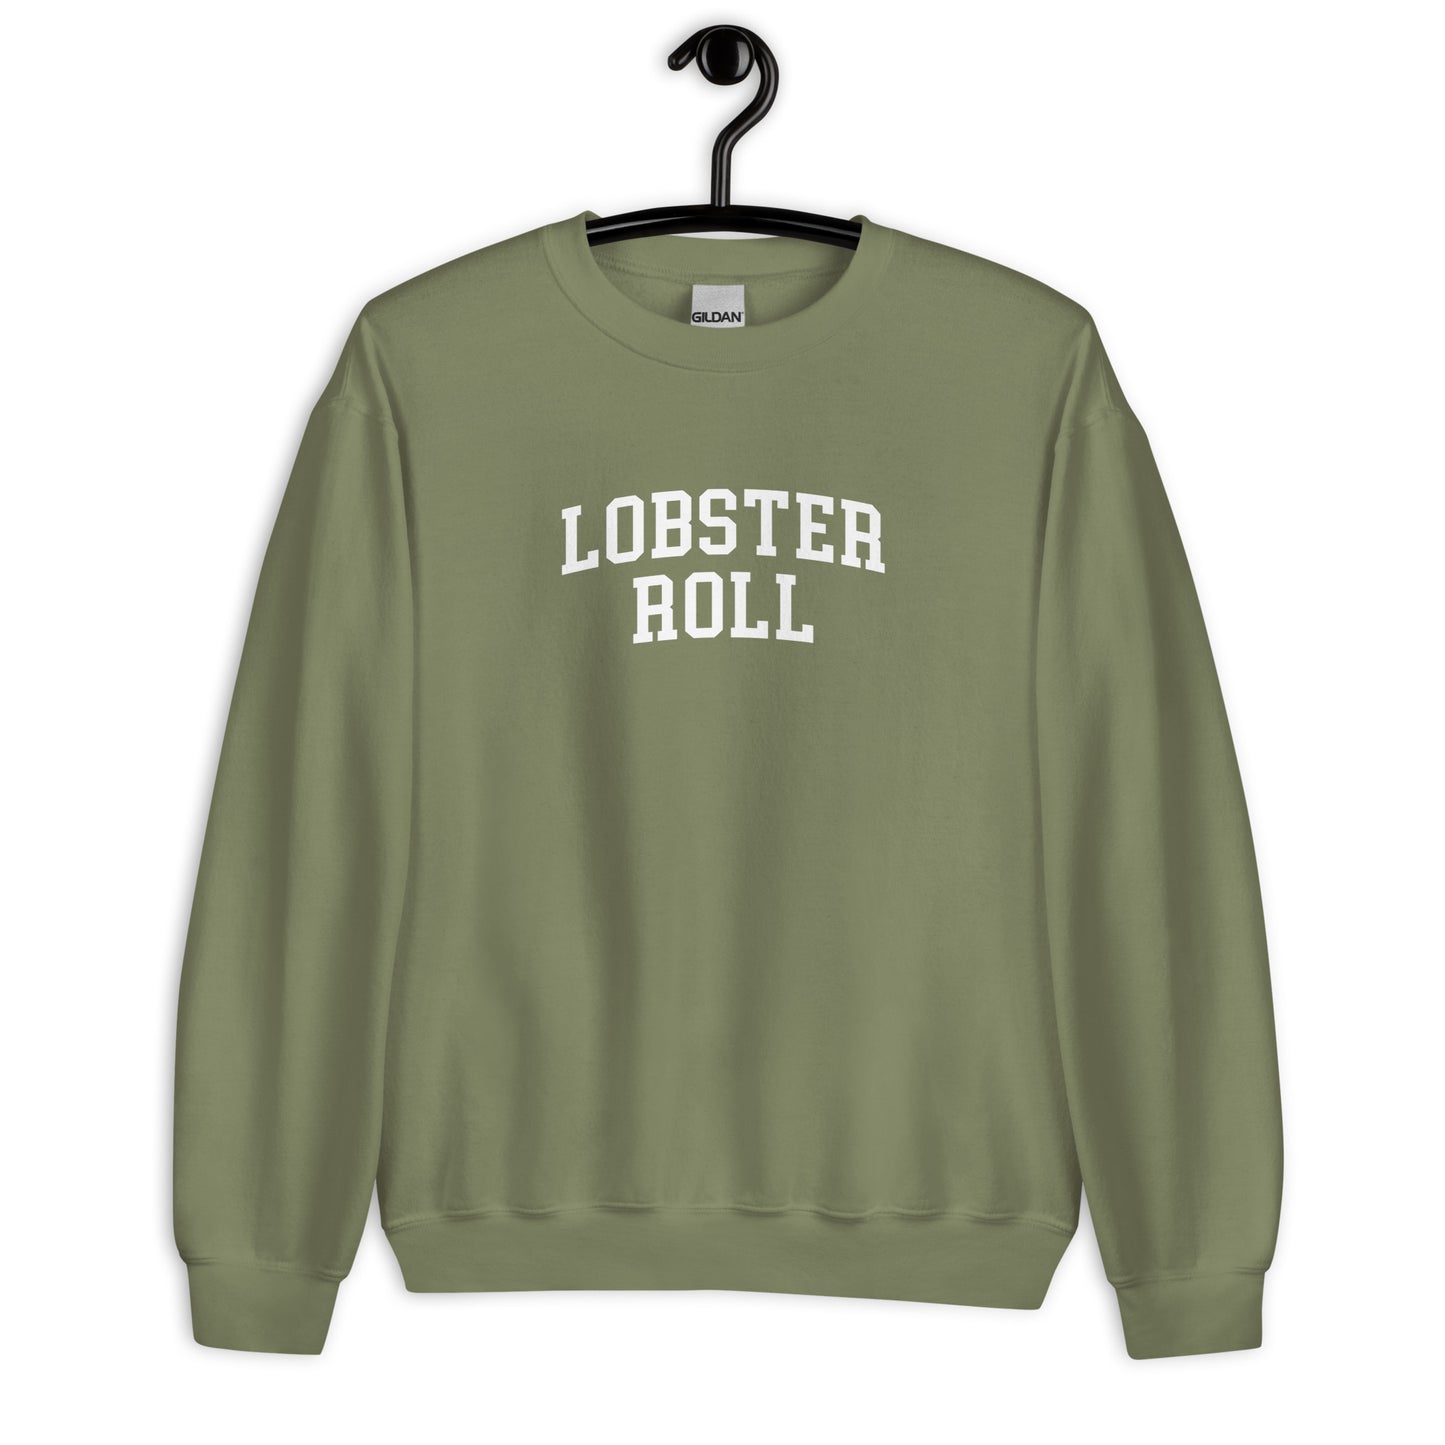 Lobster Roll Sweatshirt - Arched Font